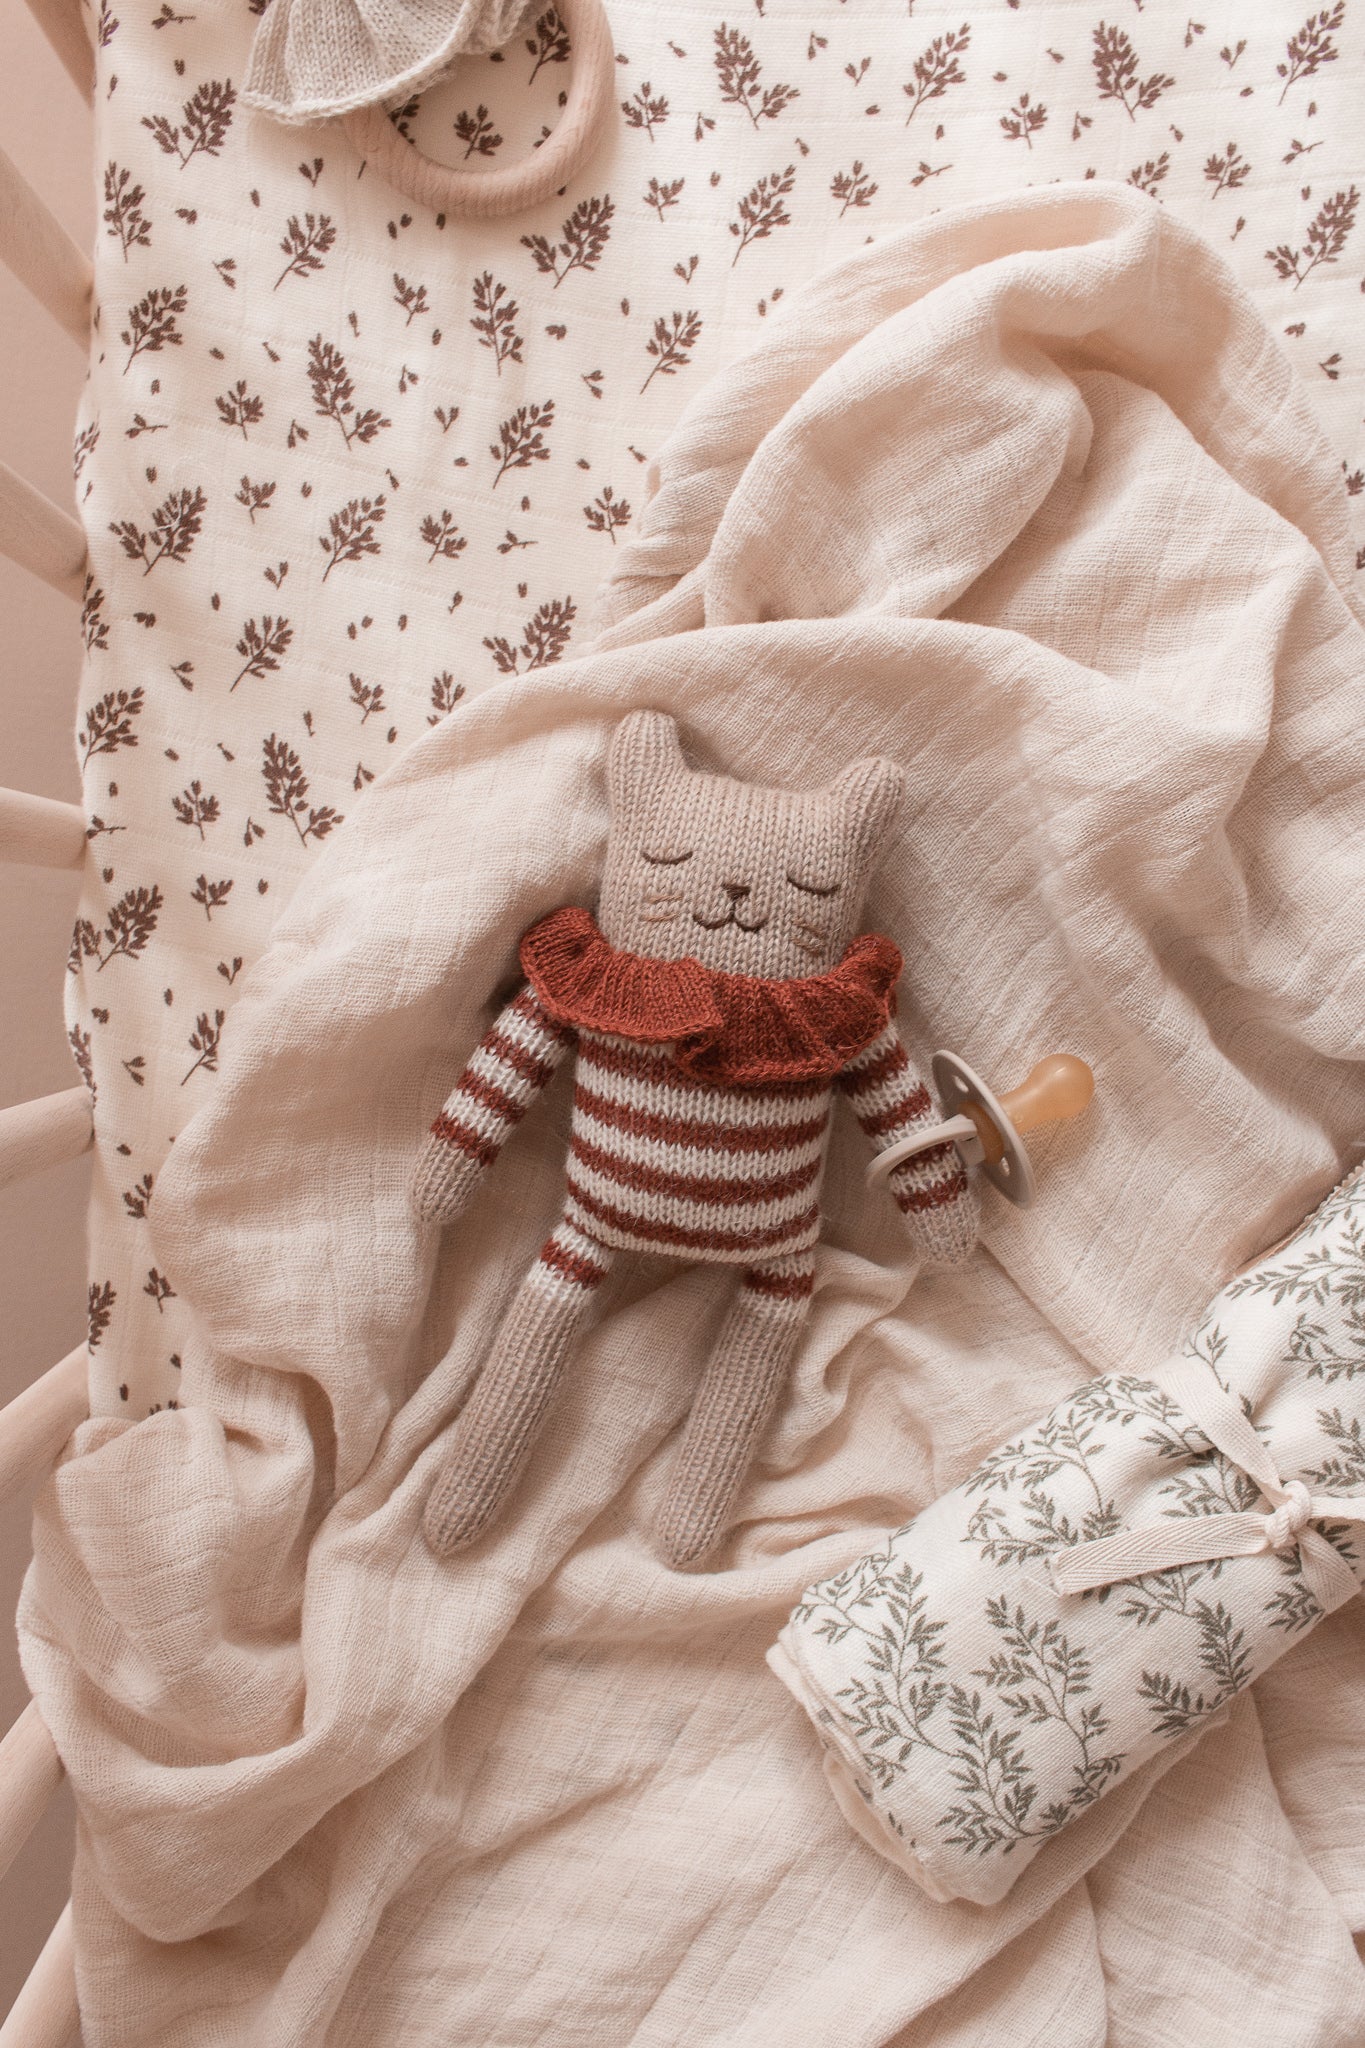 Kitten Knit Toy- Sienna Striped Romper